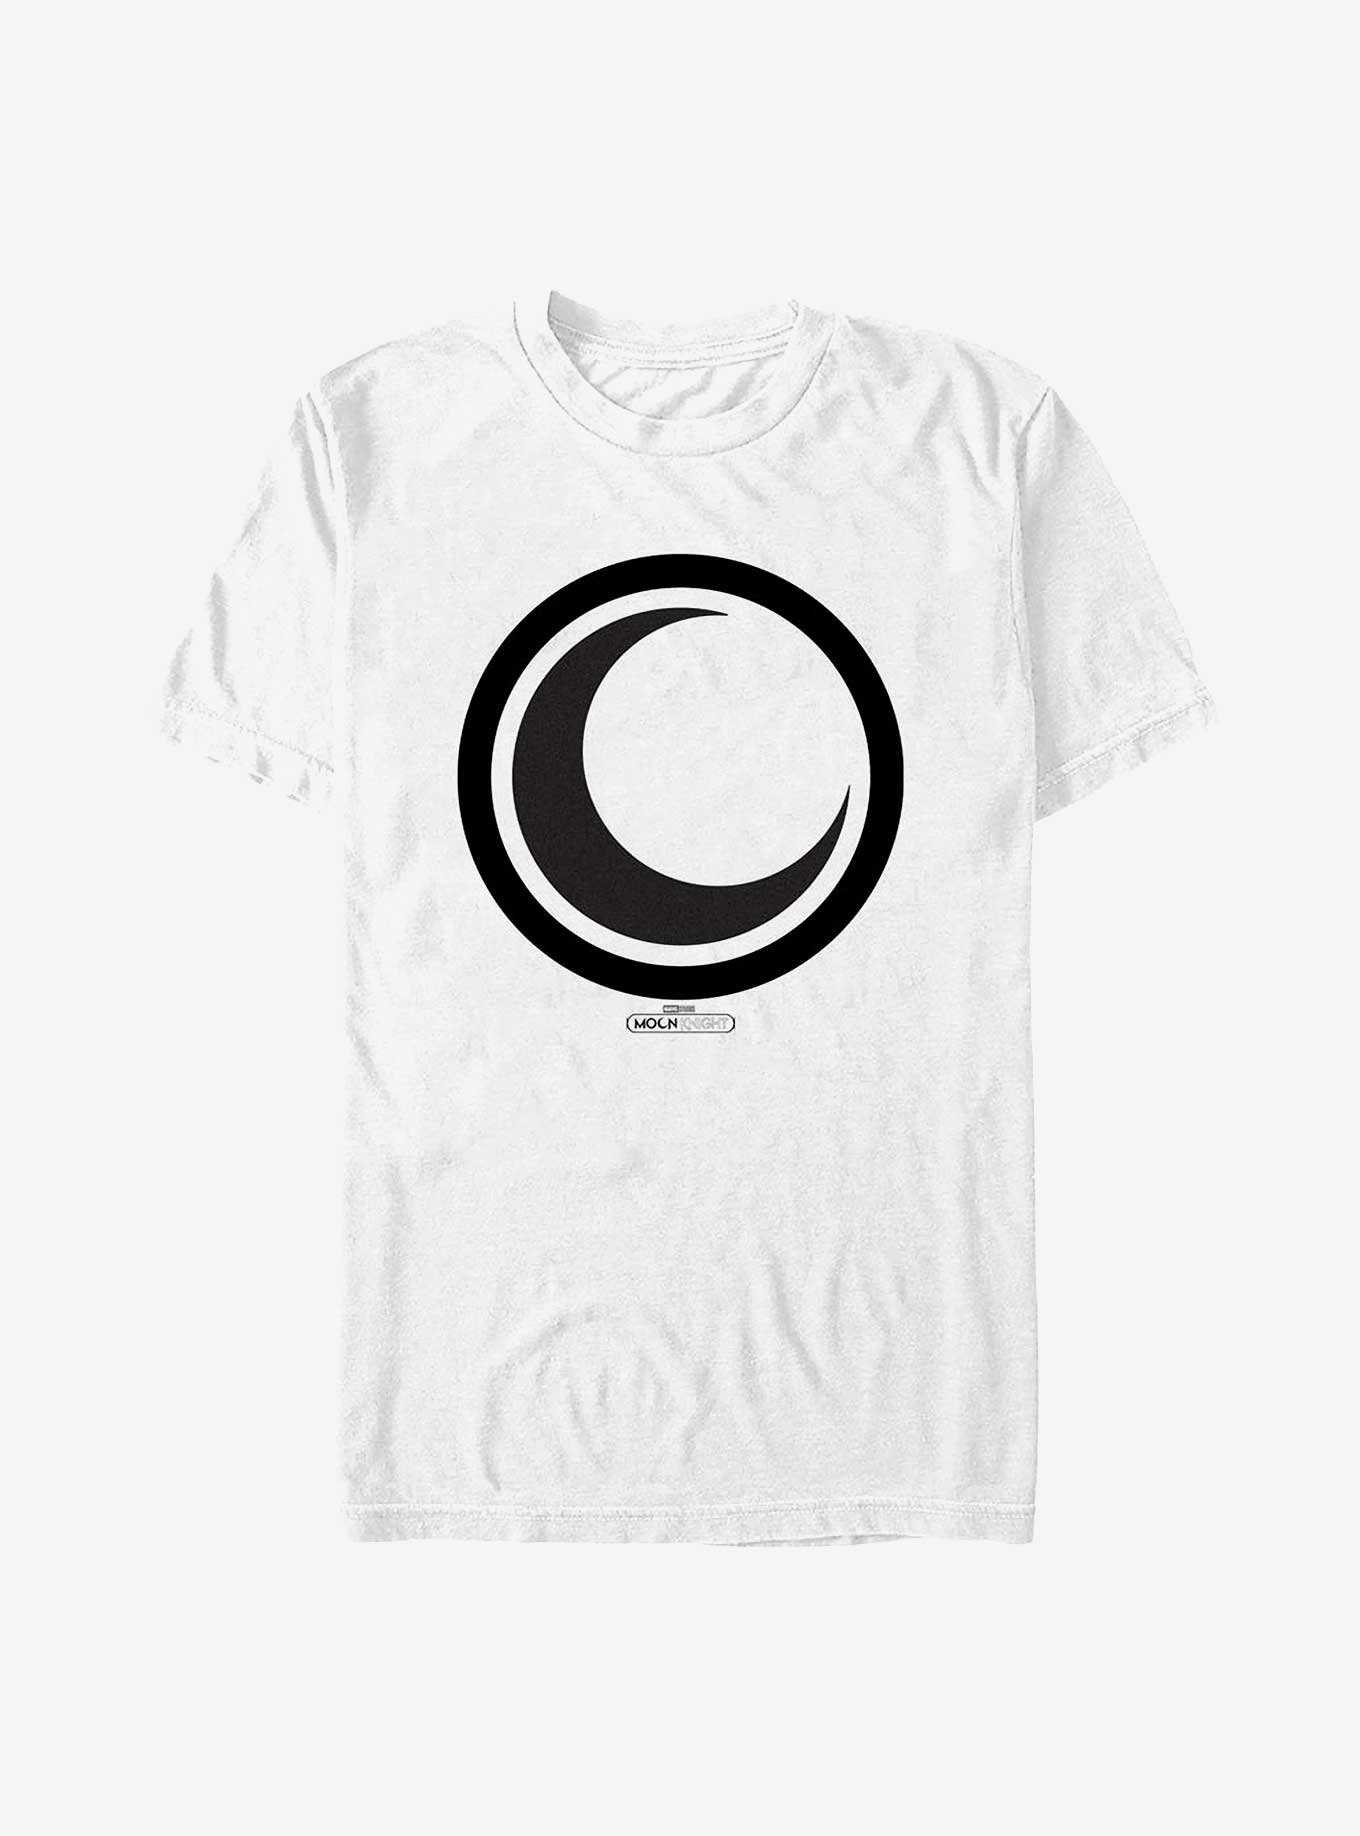 Marvel Moon Knight Crescent Icon T-Shirt, , hi-res